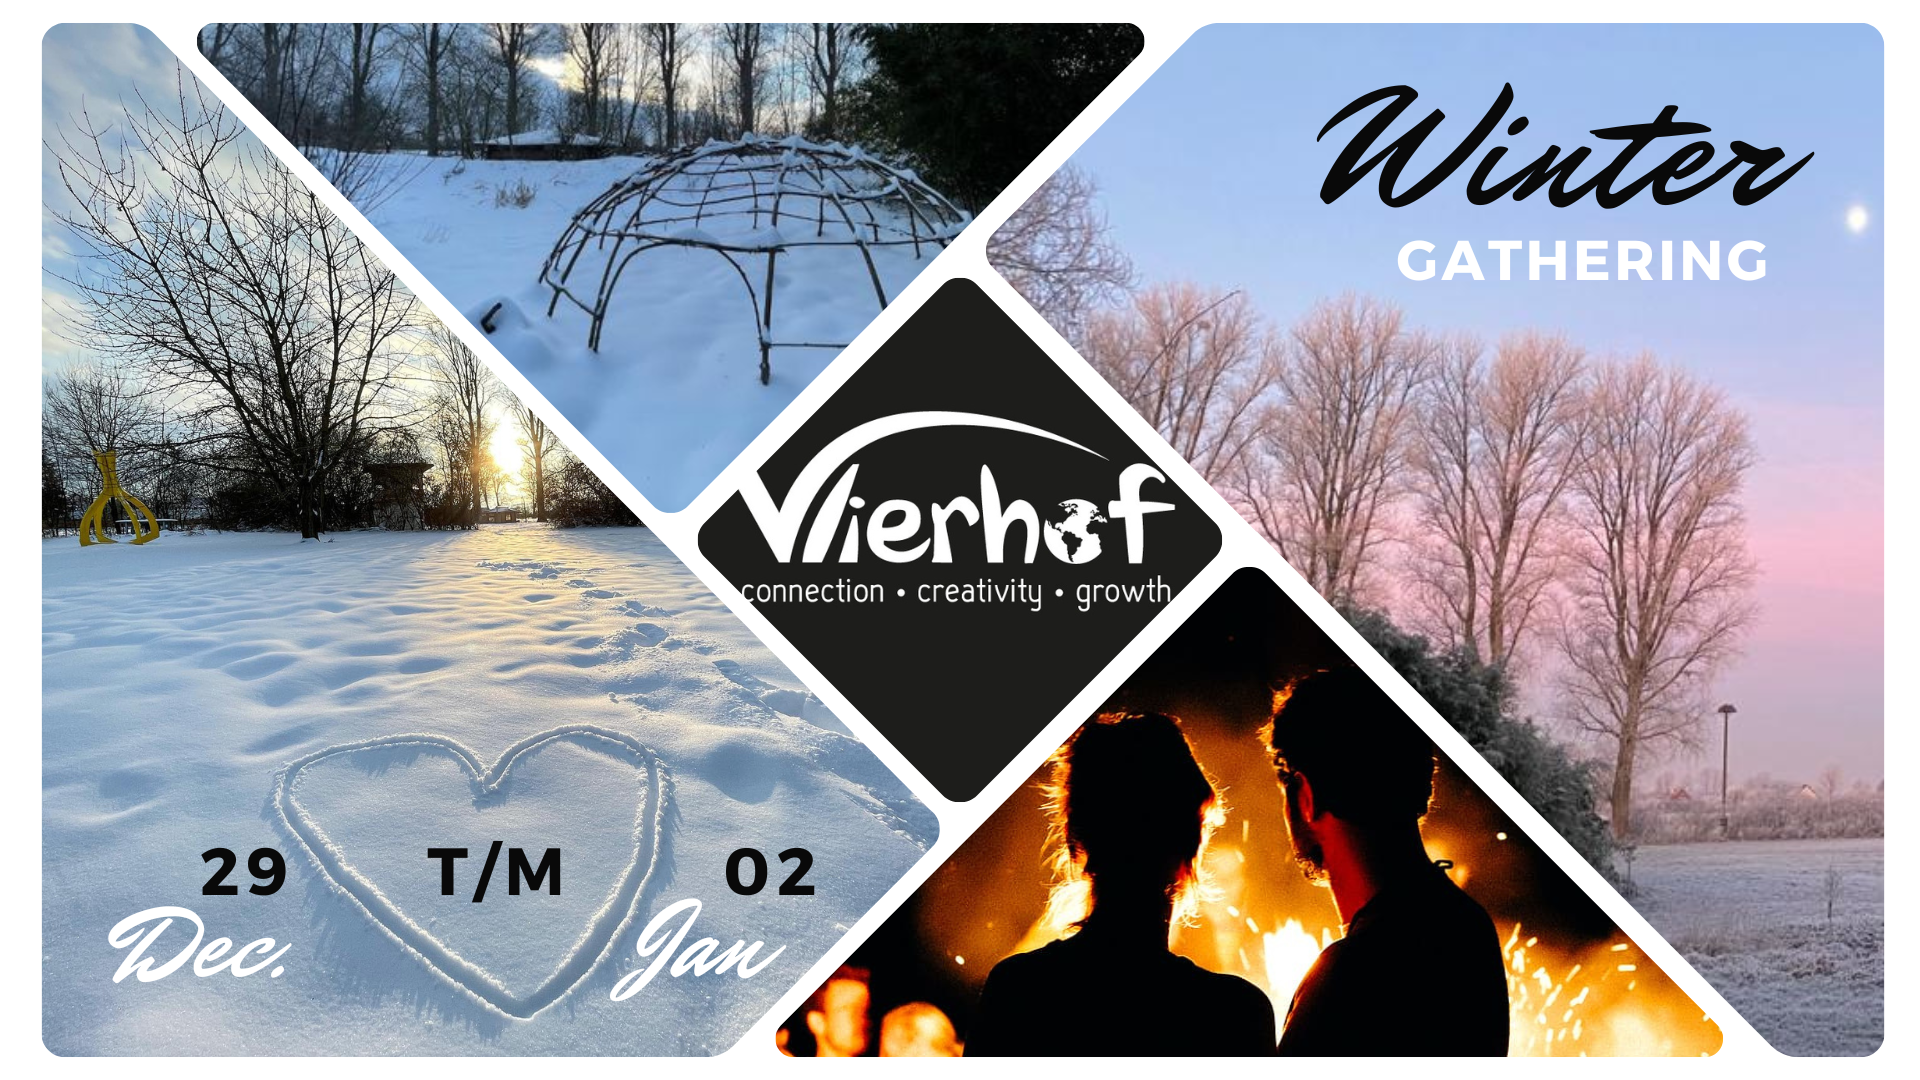 vlierhof winter gathering